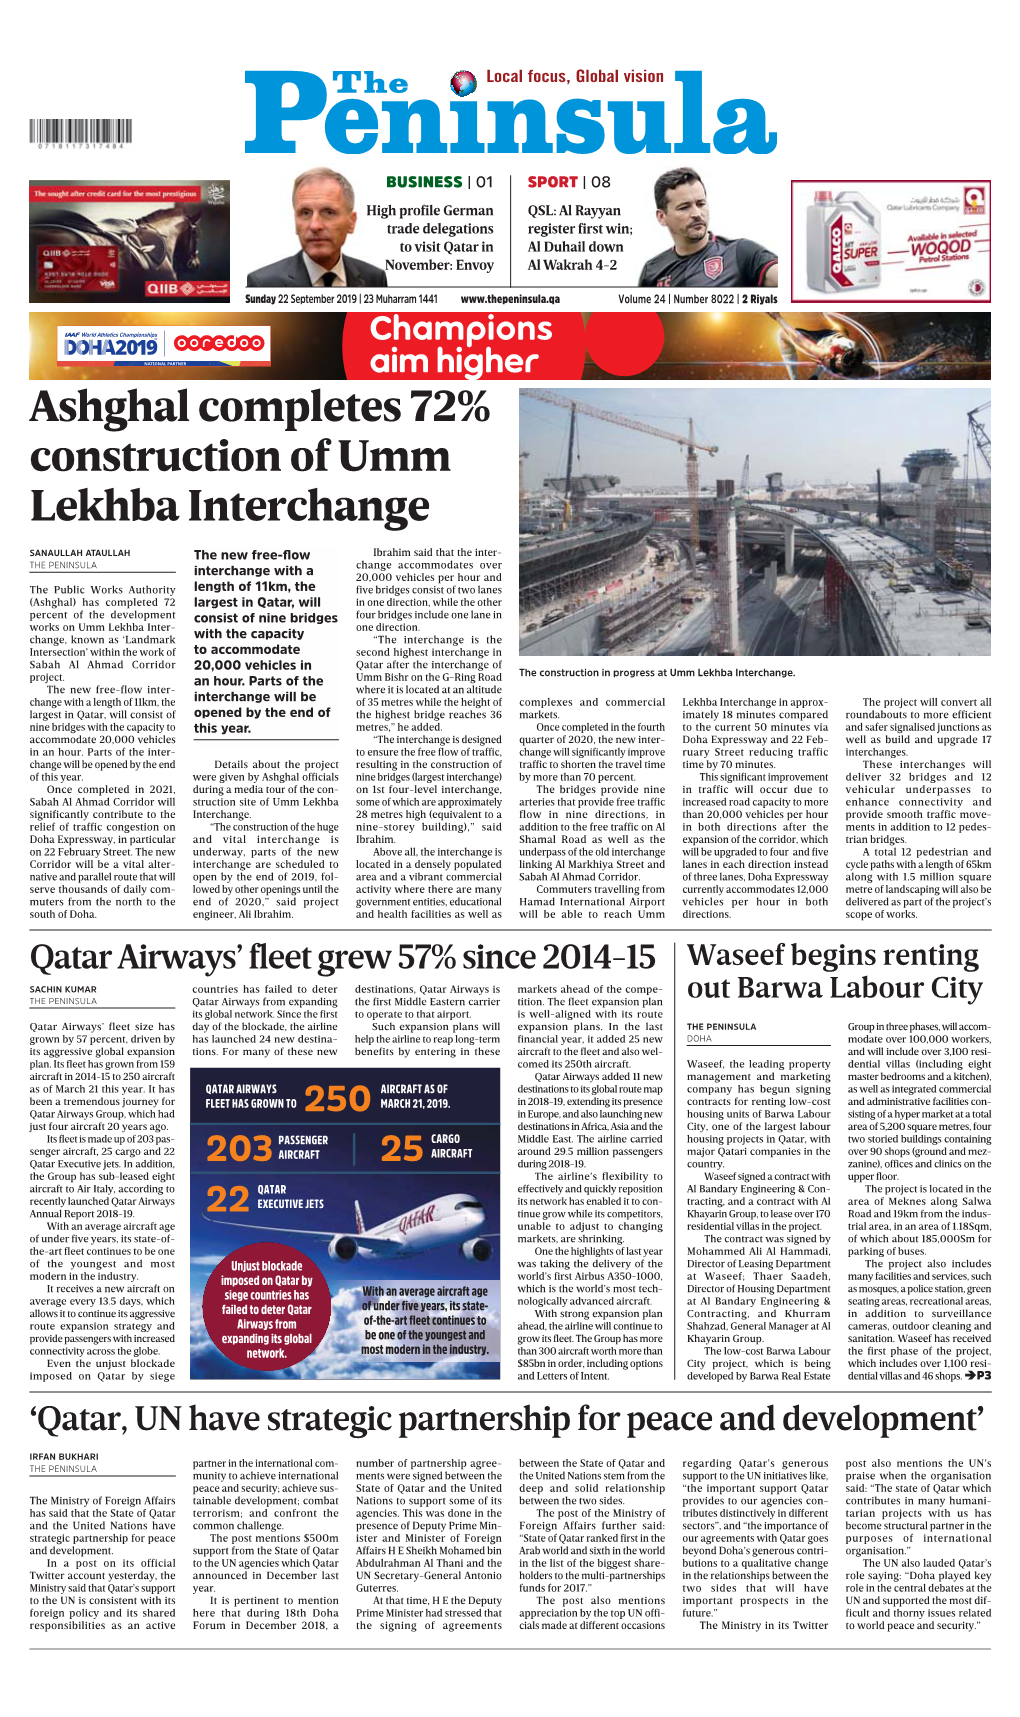 Ashghal Completes 72% Construction of Umm Lekhba Interchange